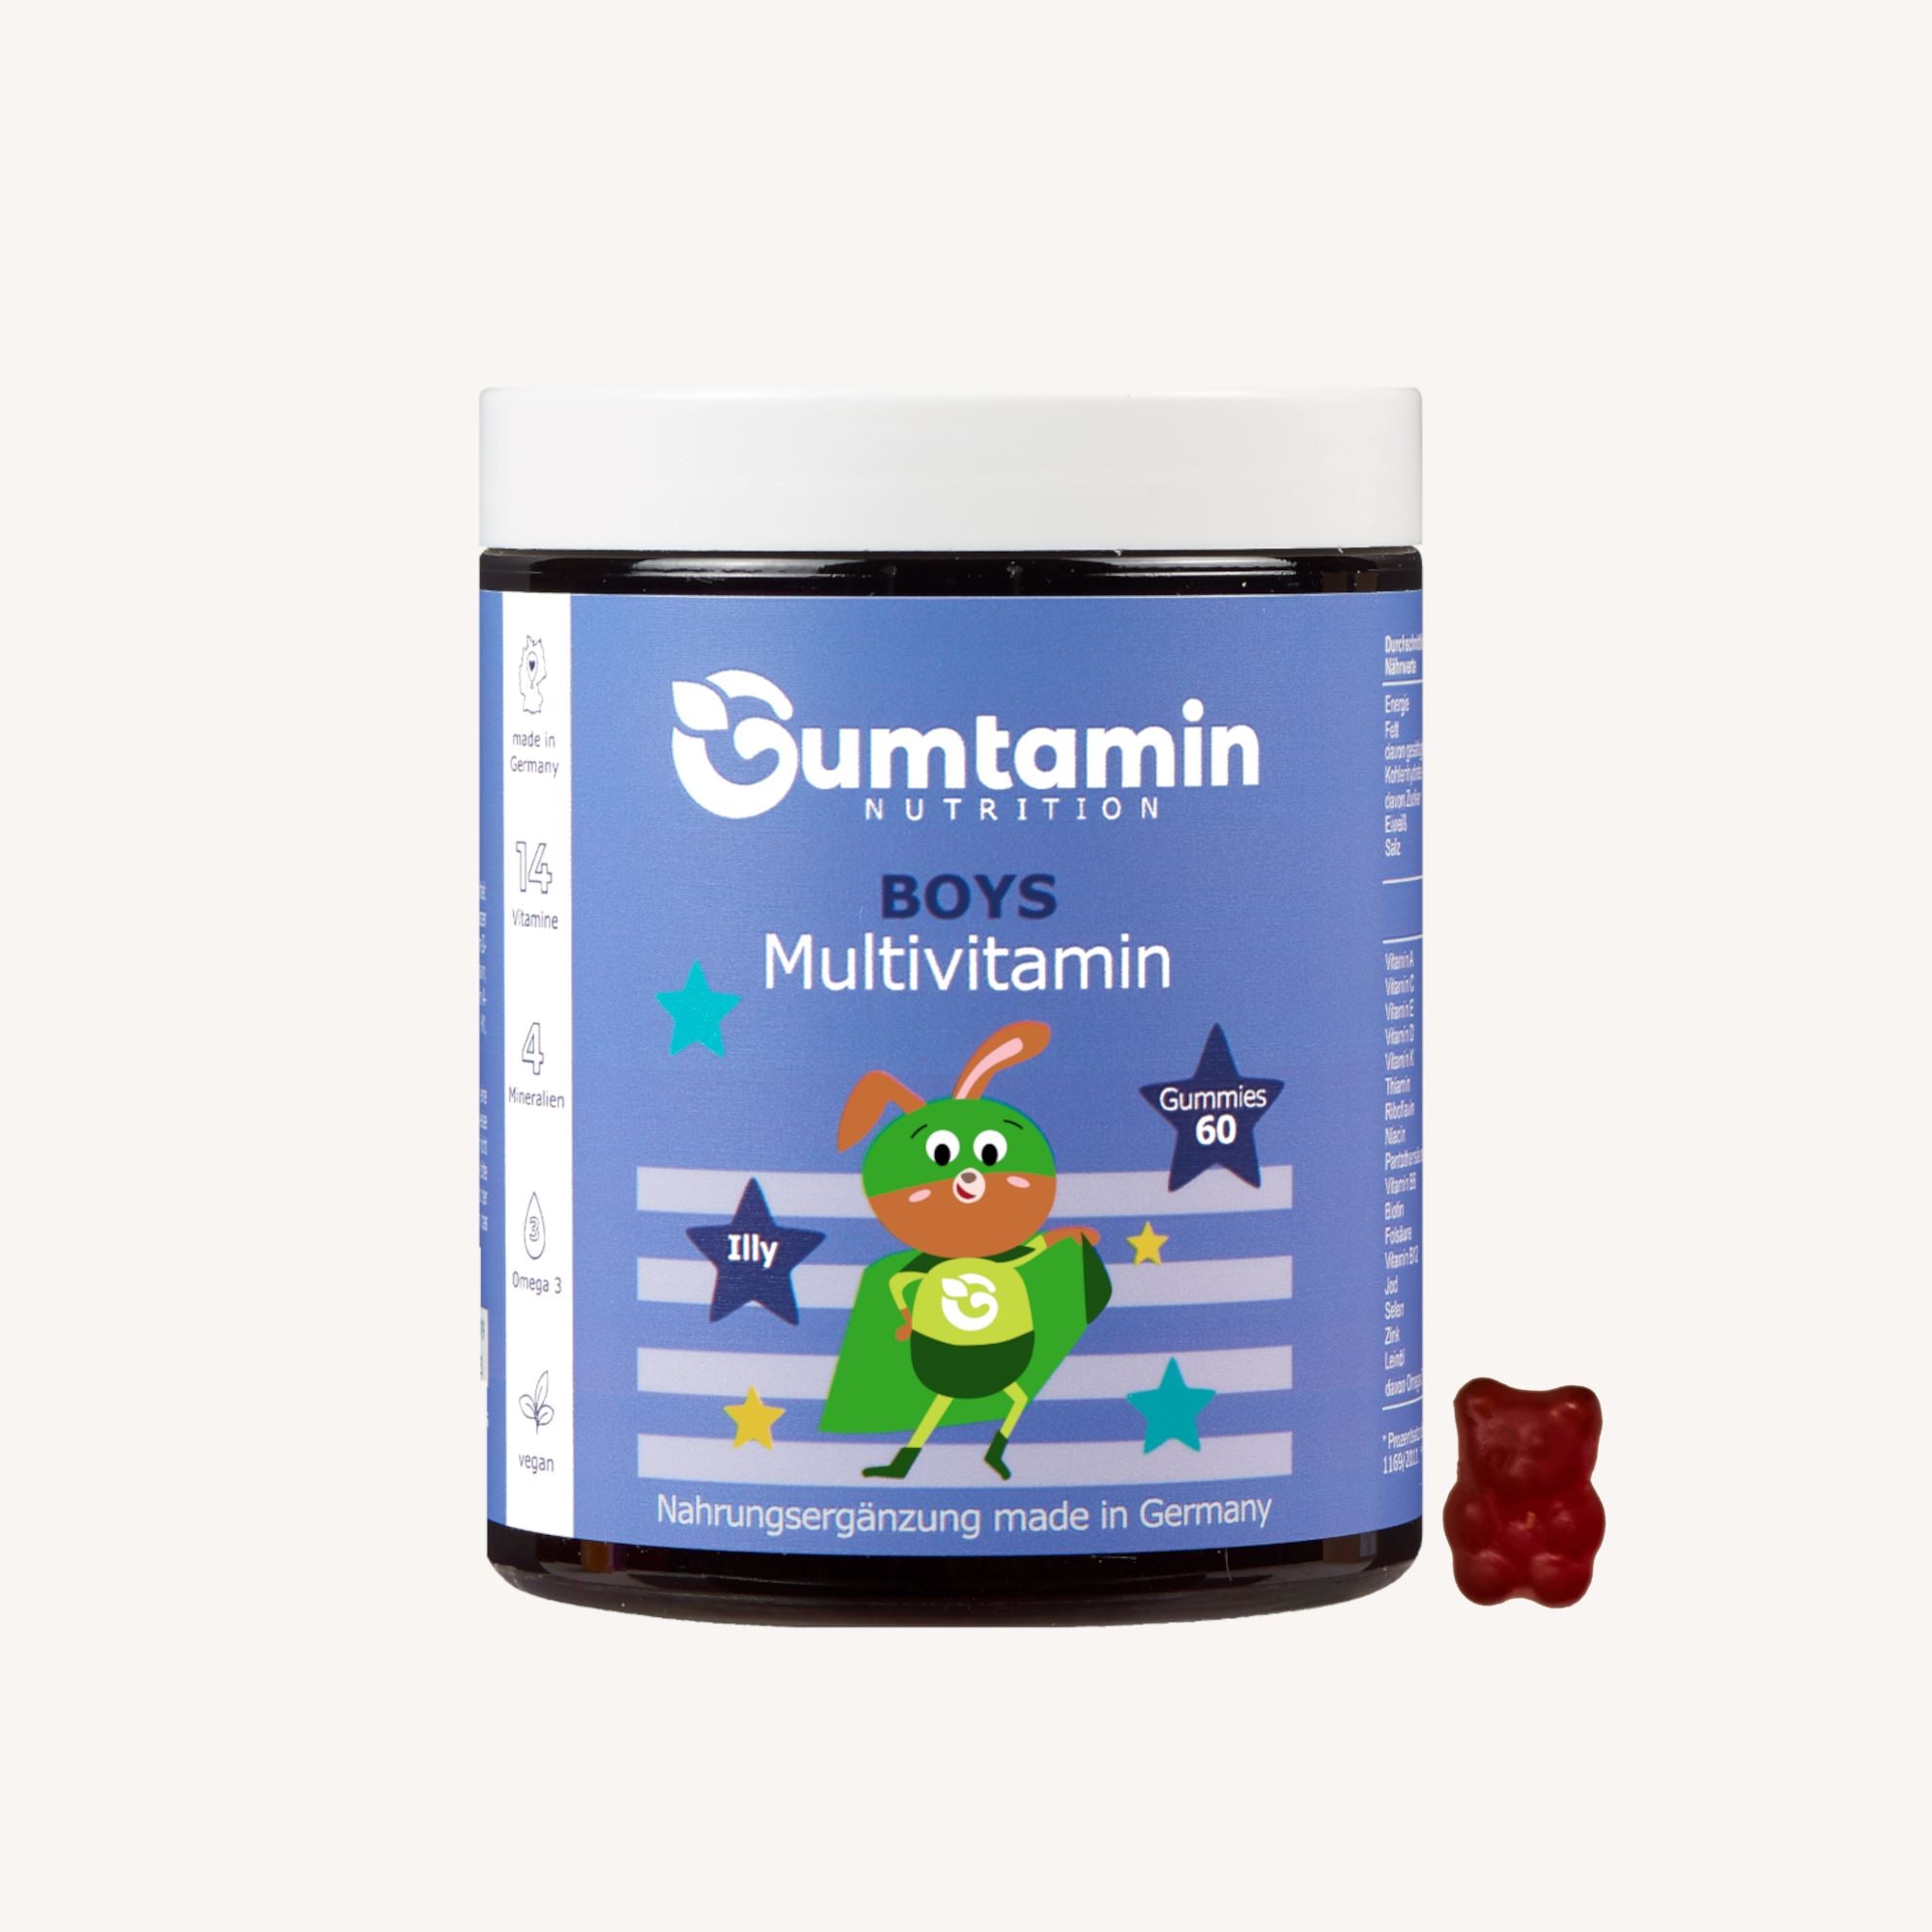 Kids Multivitamin Gummies Blau gumtamin 1x 60 Stück 